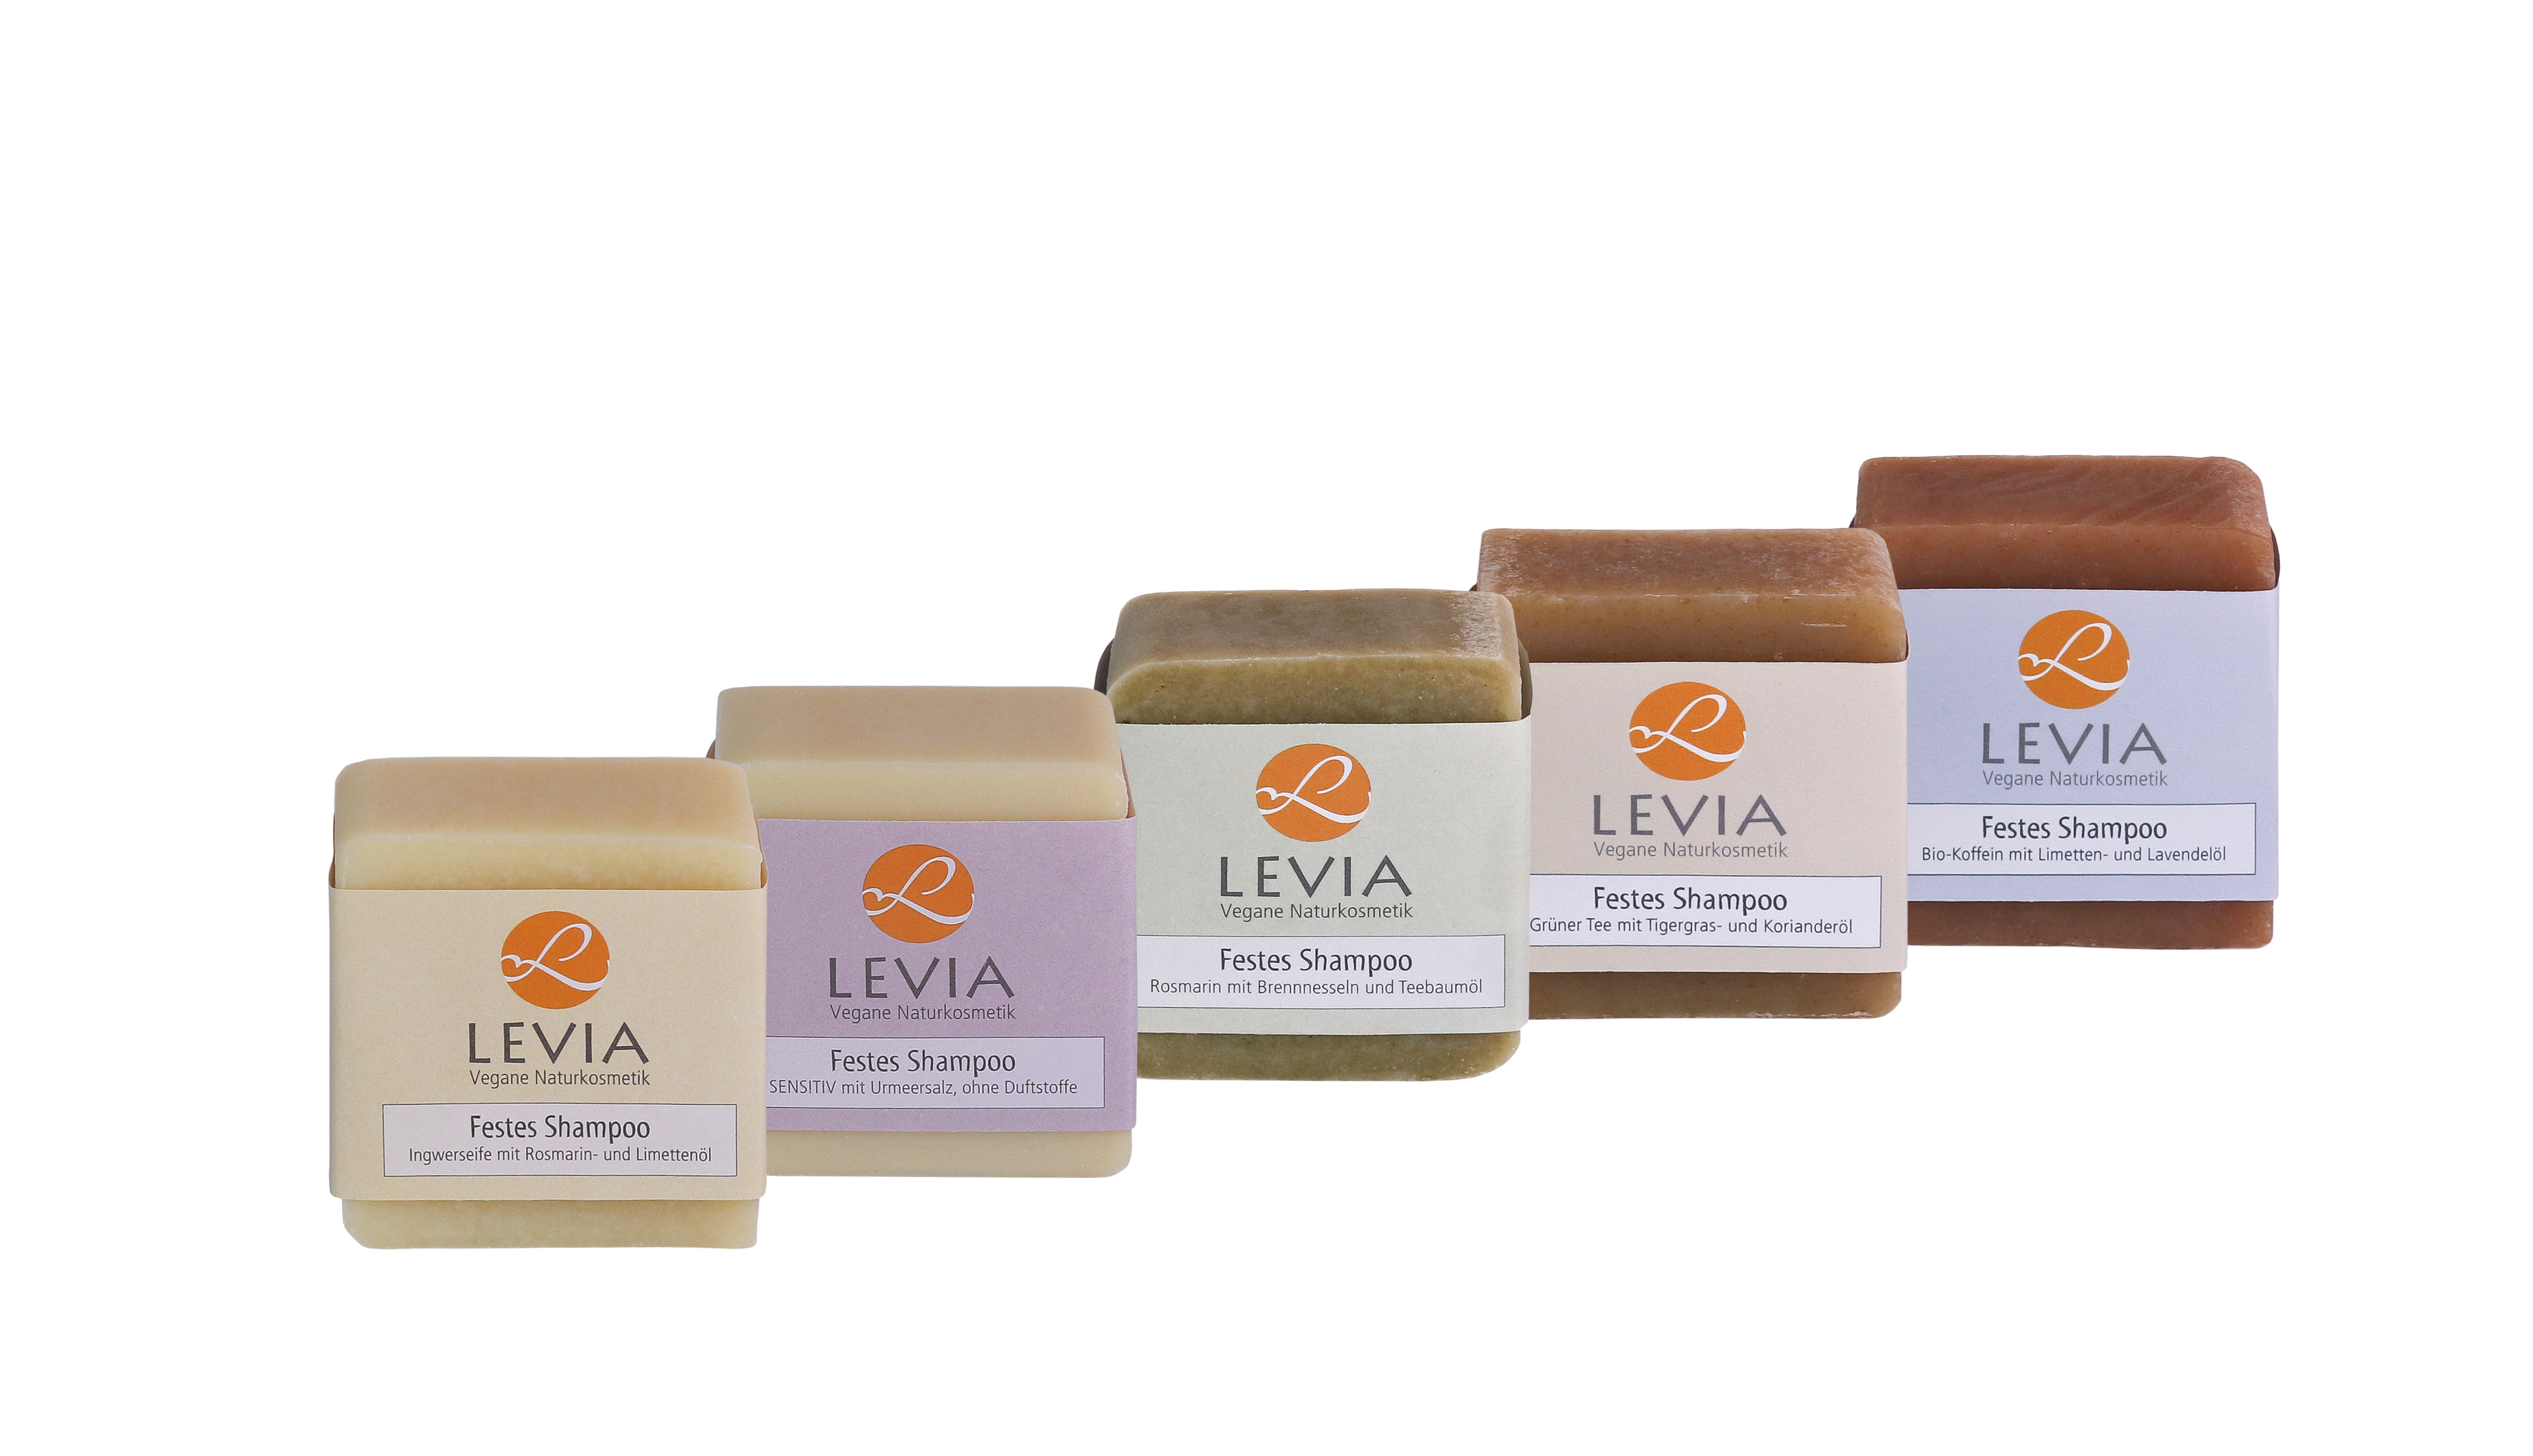 5. Levia Vegane Naturkosmetik solid hair soaps